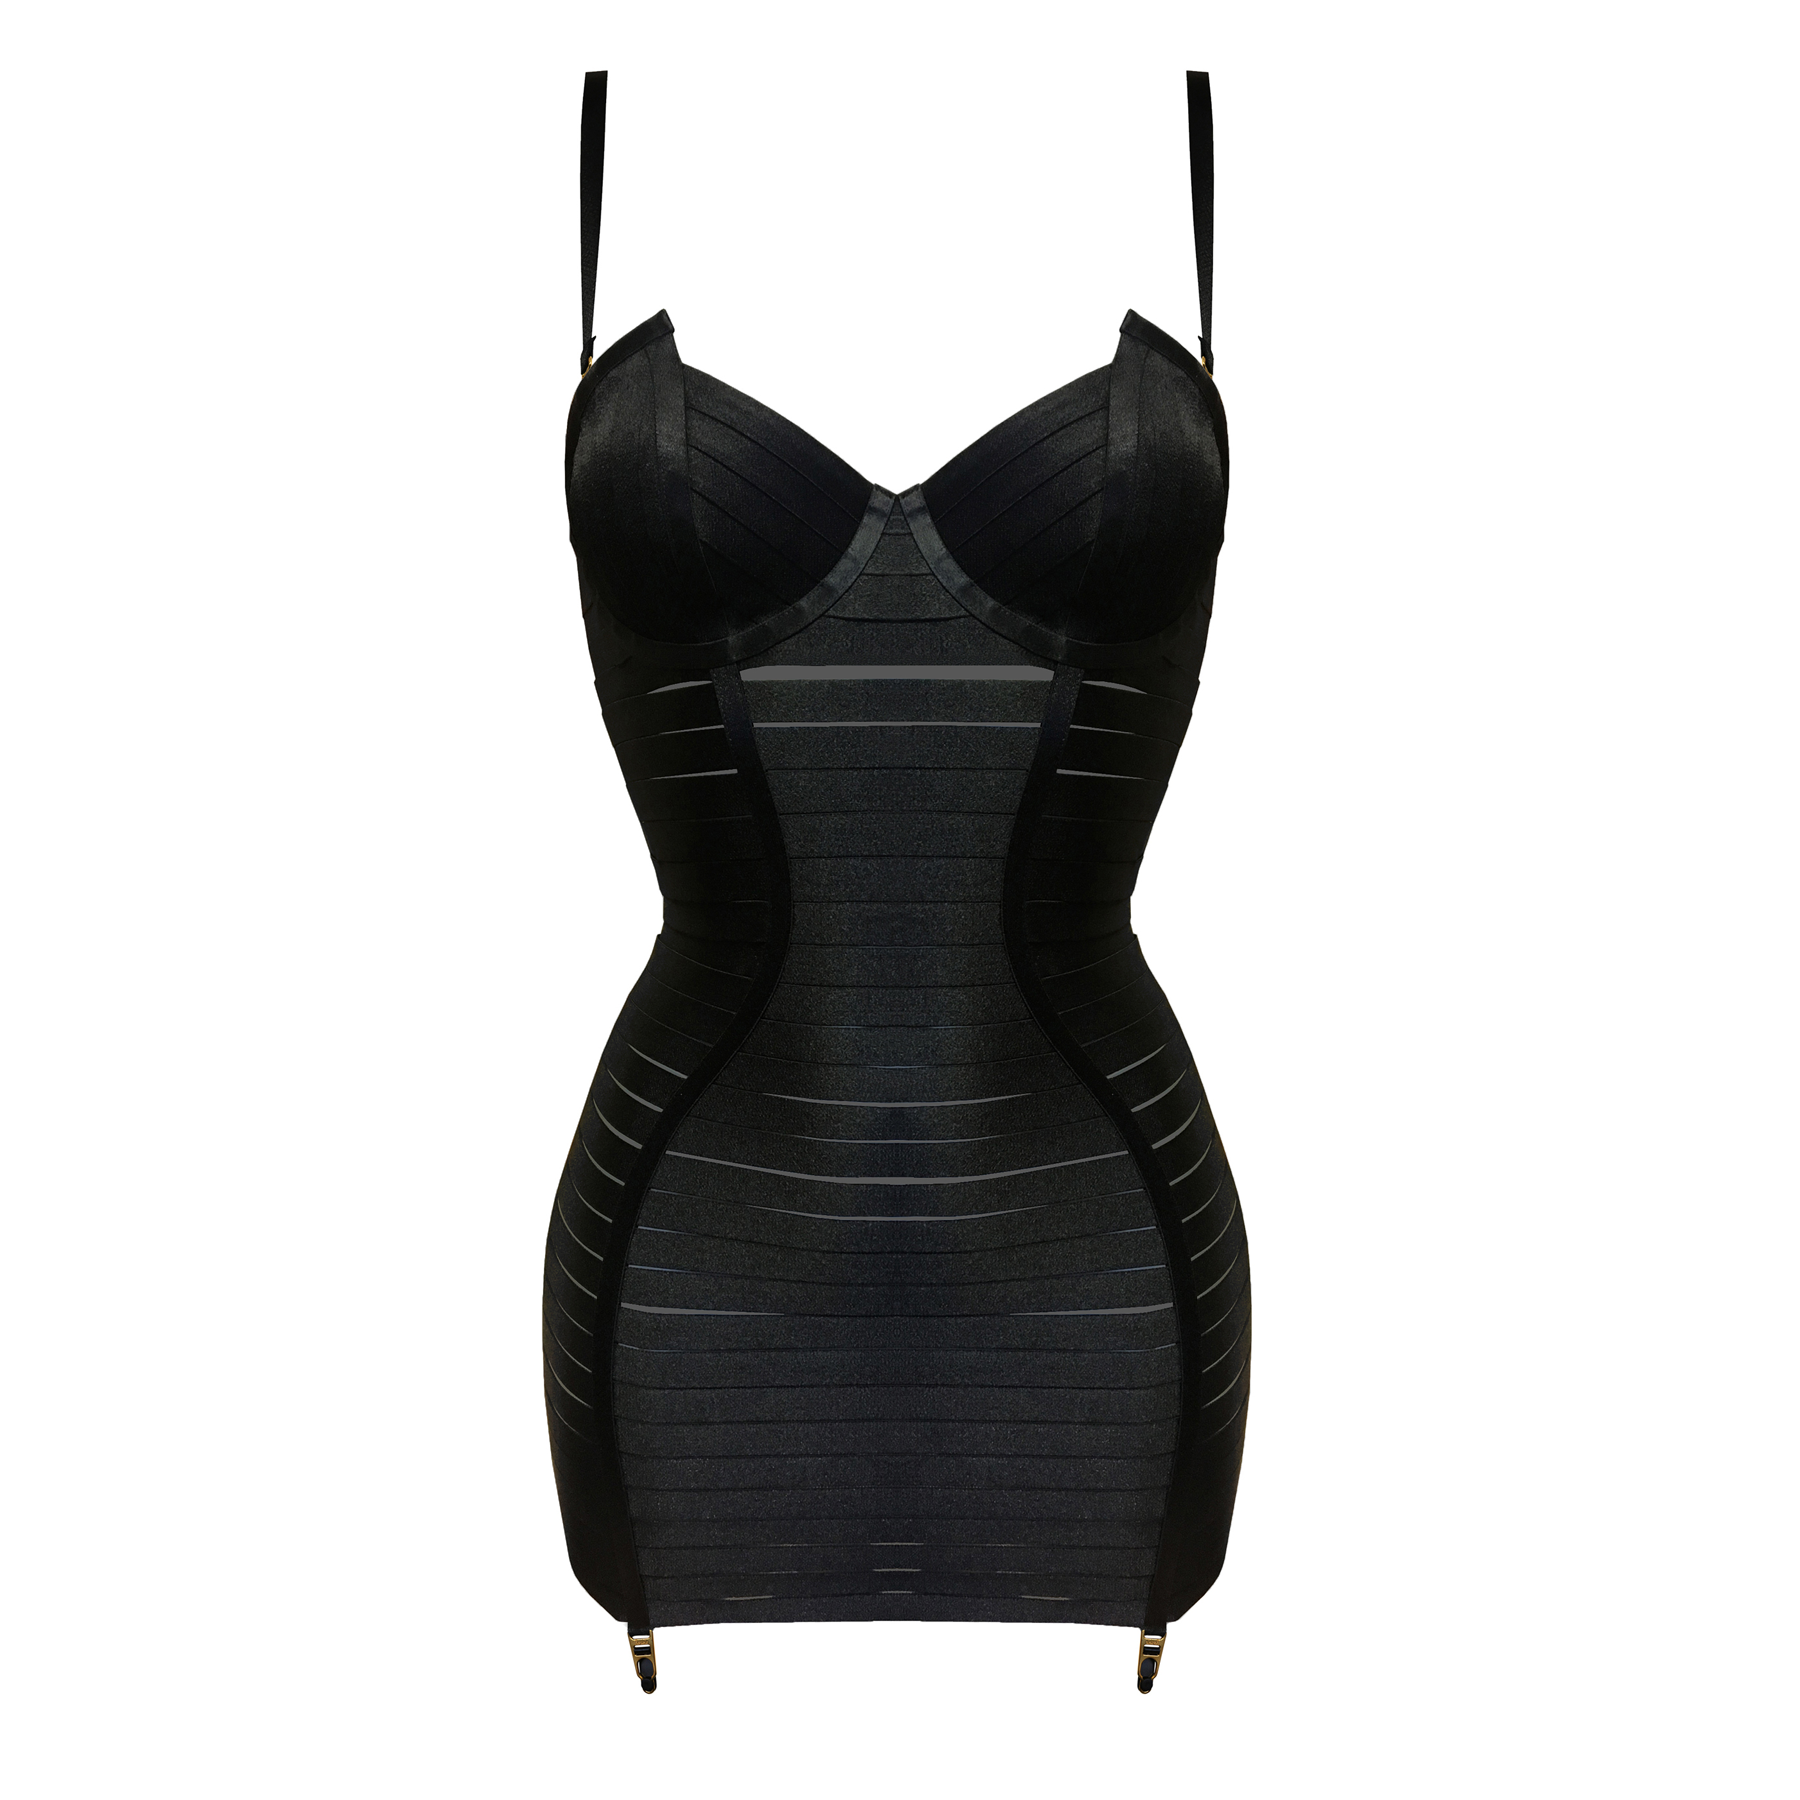 Adjustable Angela dress by Bordelle - black